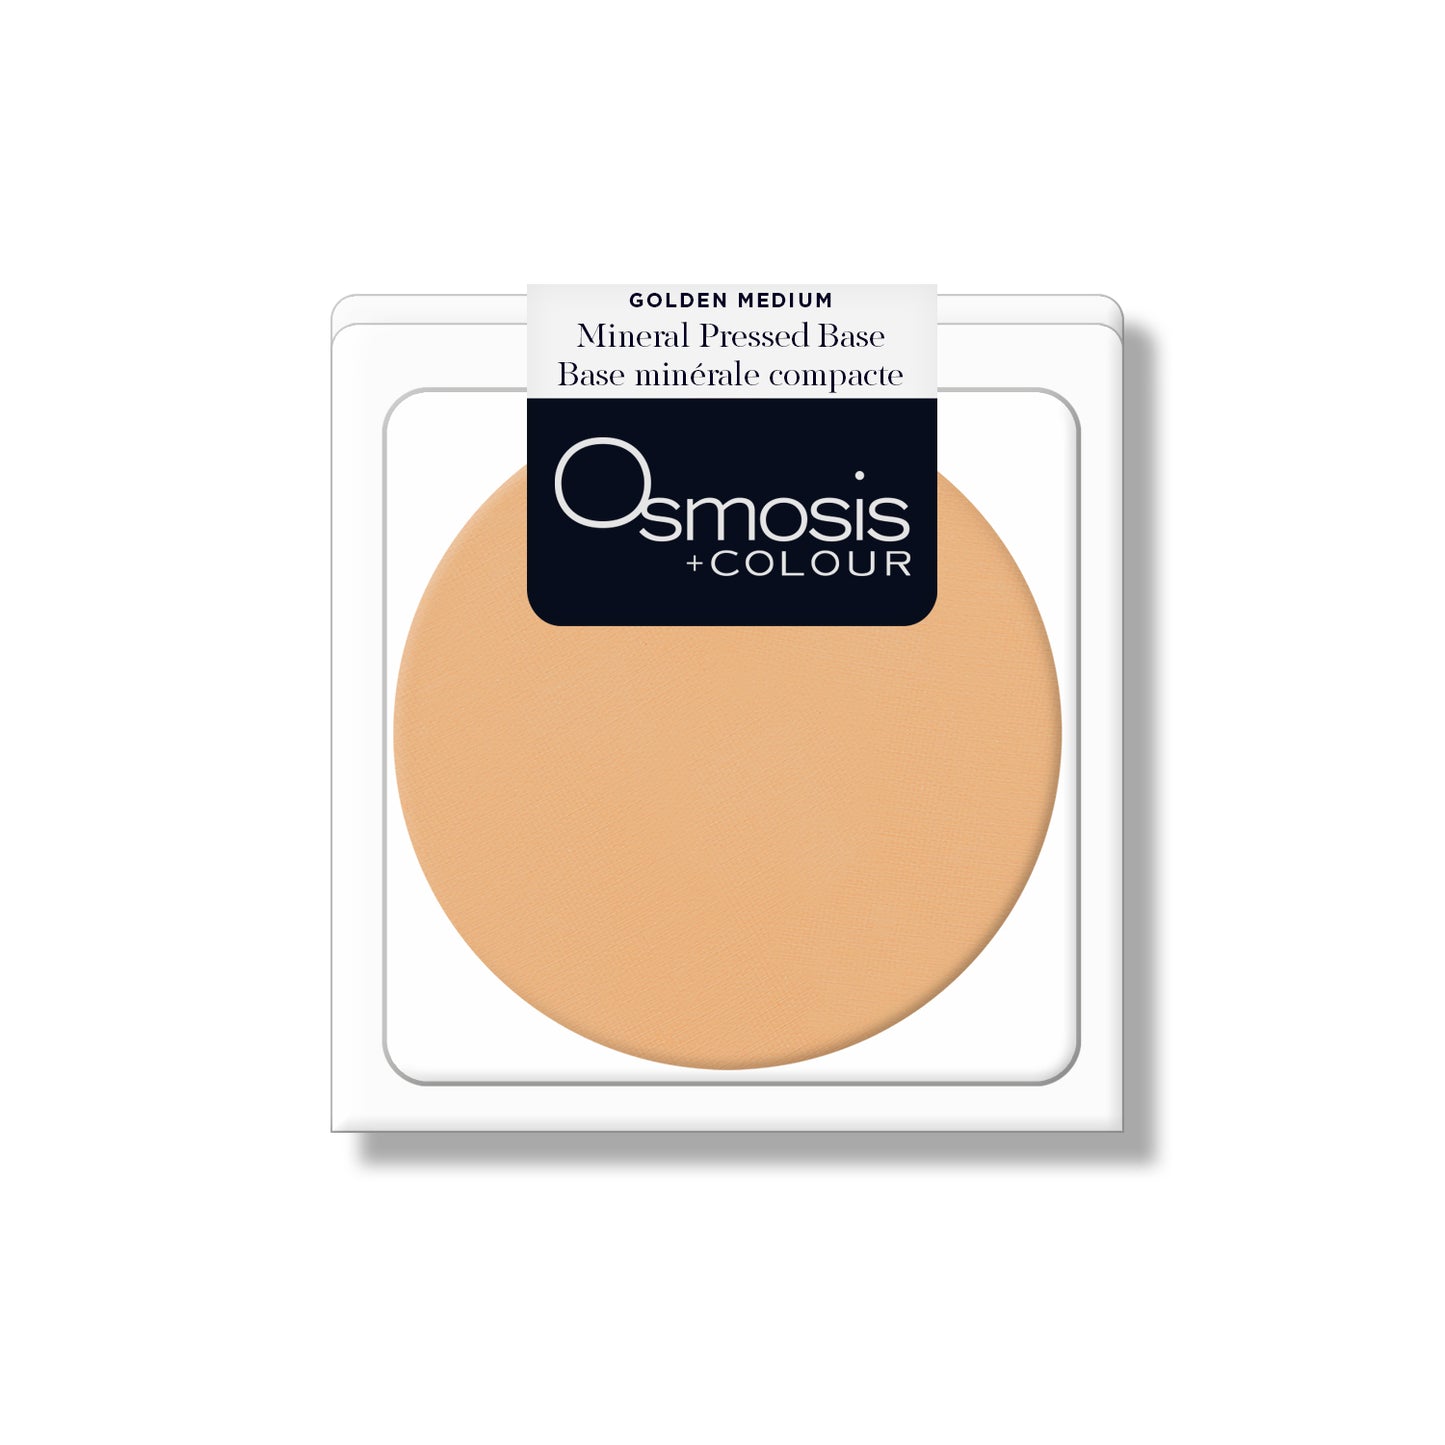 Osmosis Mineral pressed base golden medium REFILL